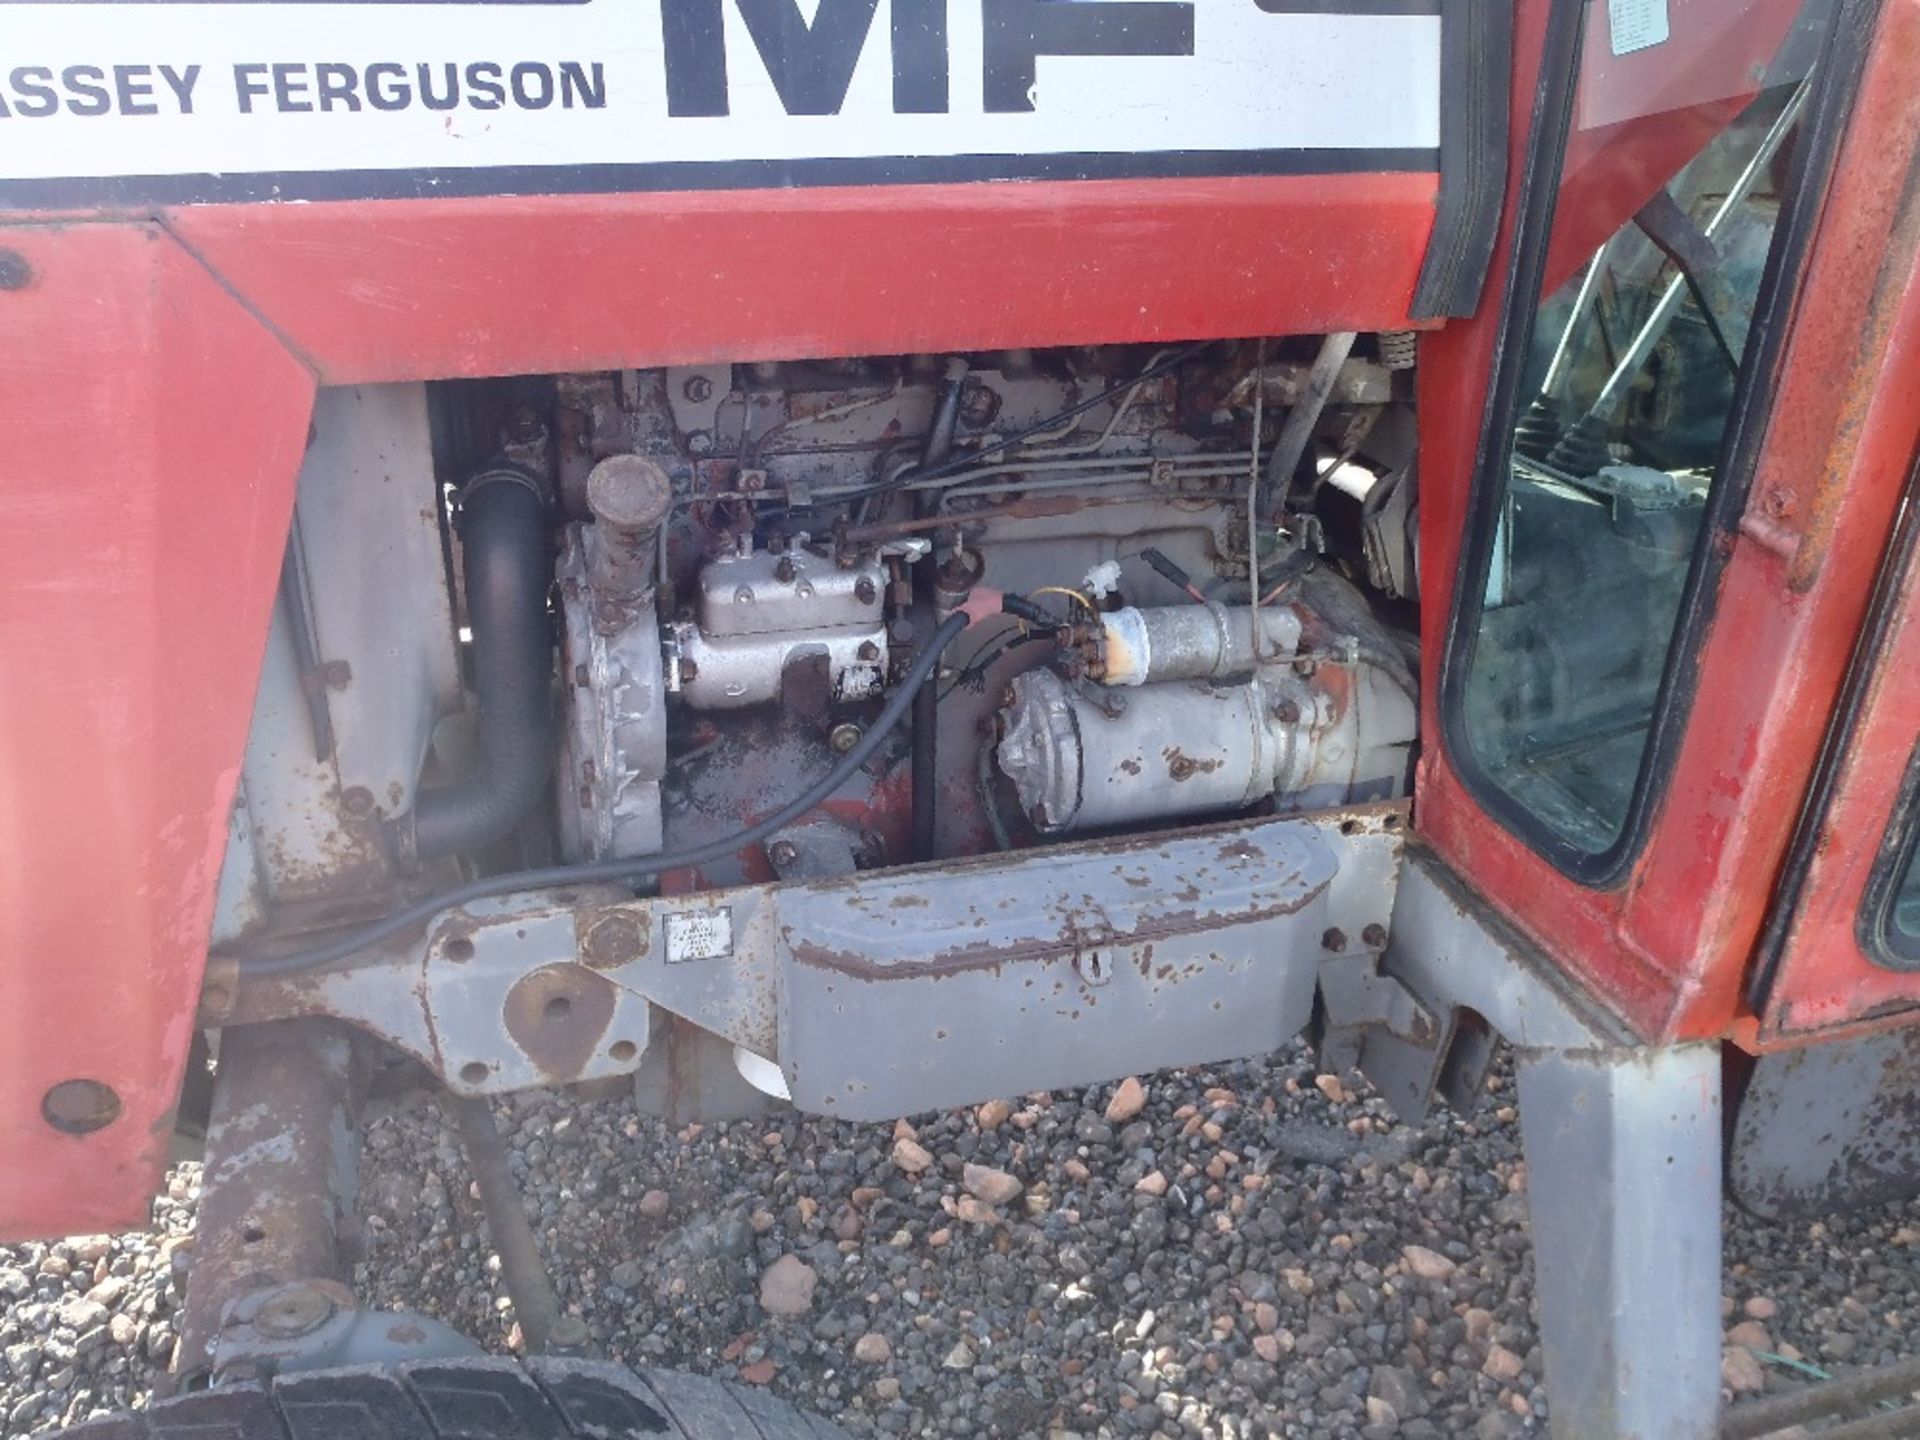 Massey Ferguson 565 2wd 8 Speed Tractor. Coventry Built Reg No DUB 103T Se rNo 655454 - Image 6 of 7